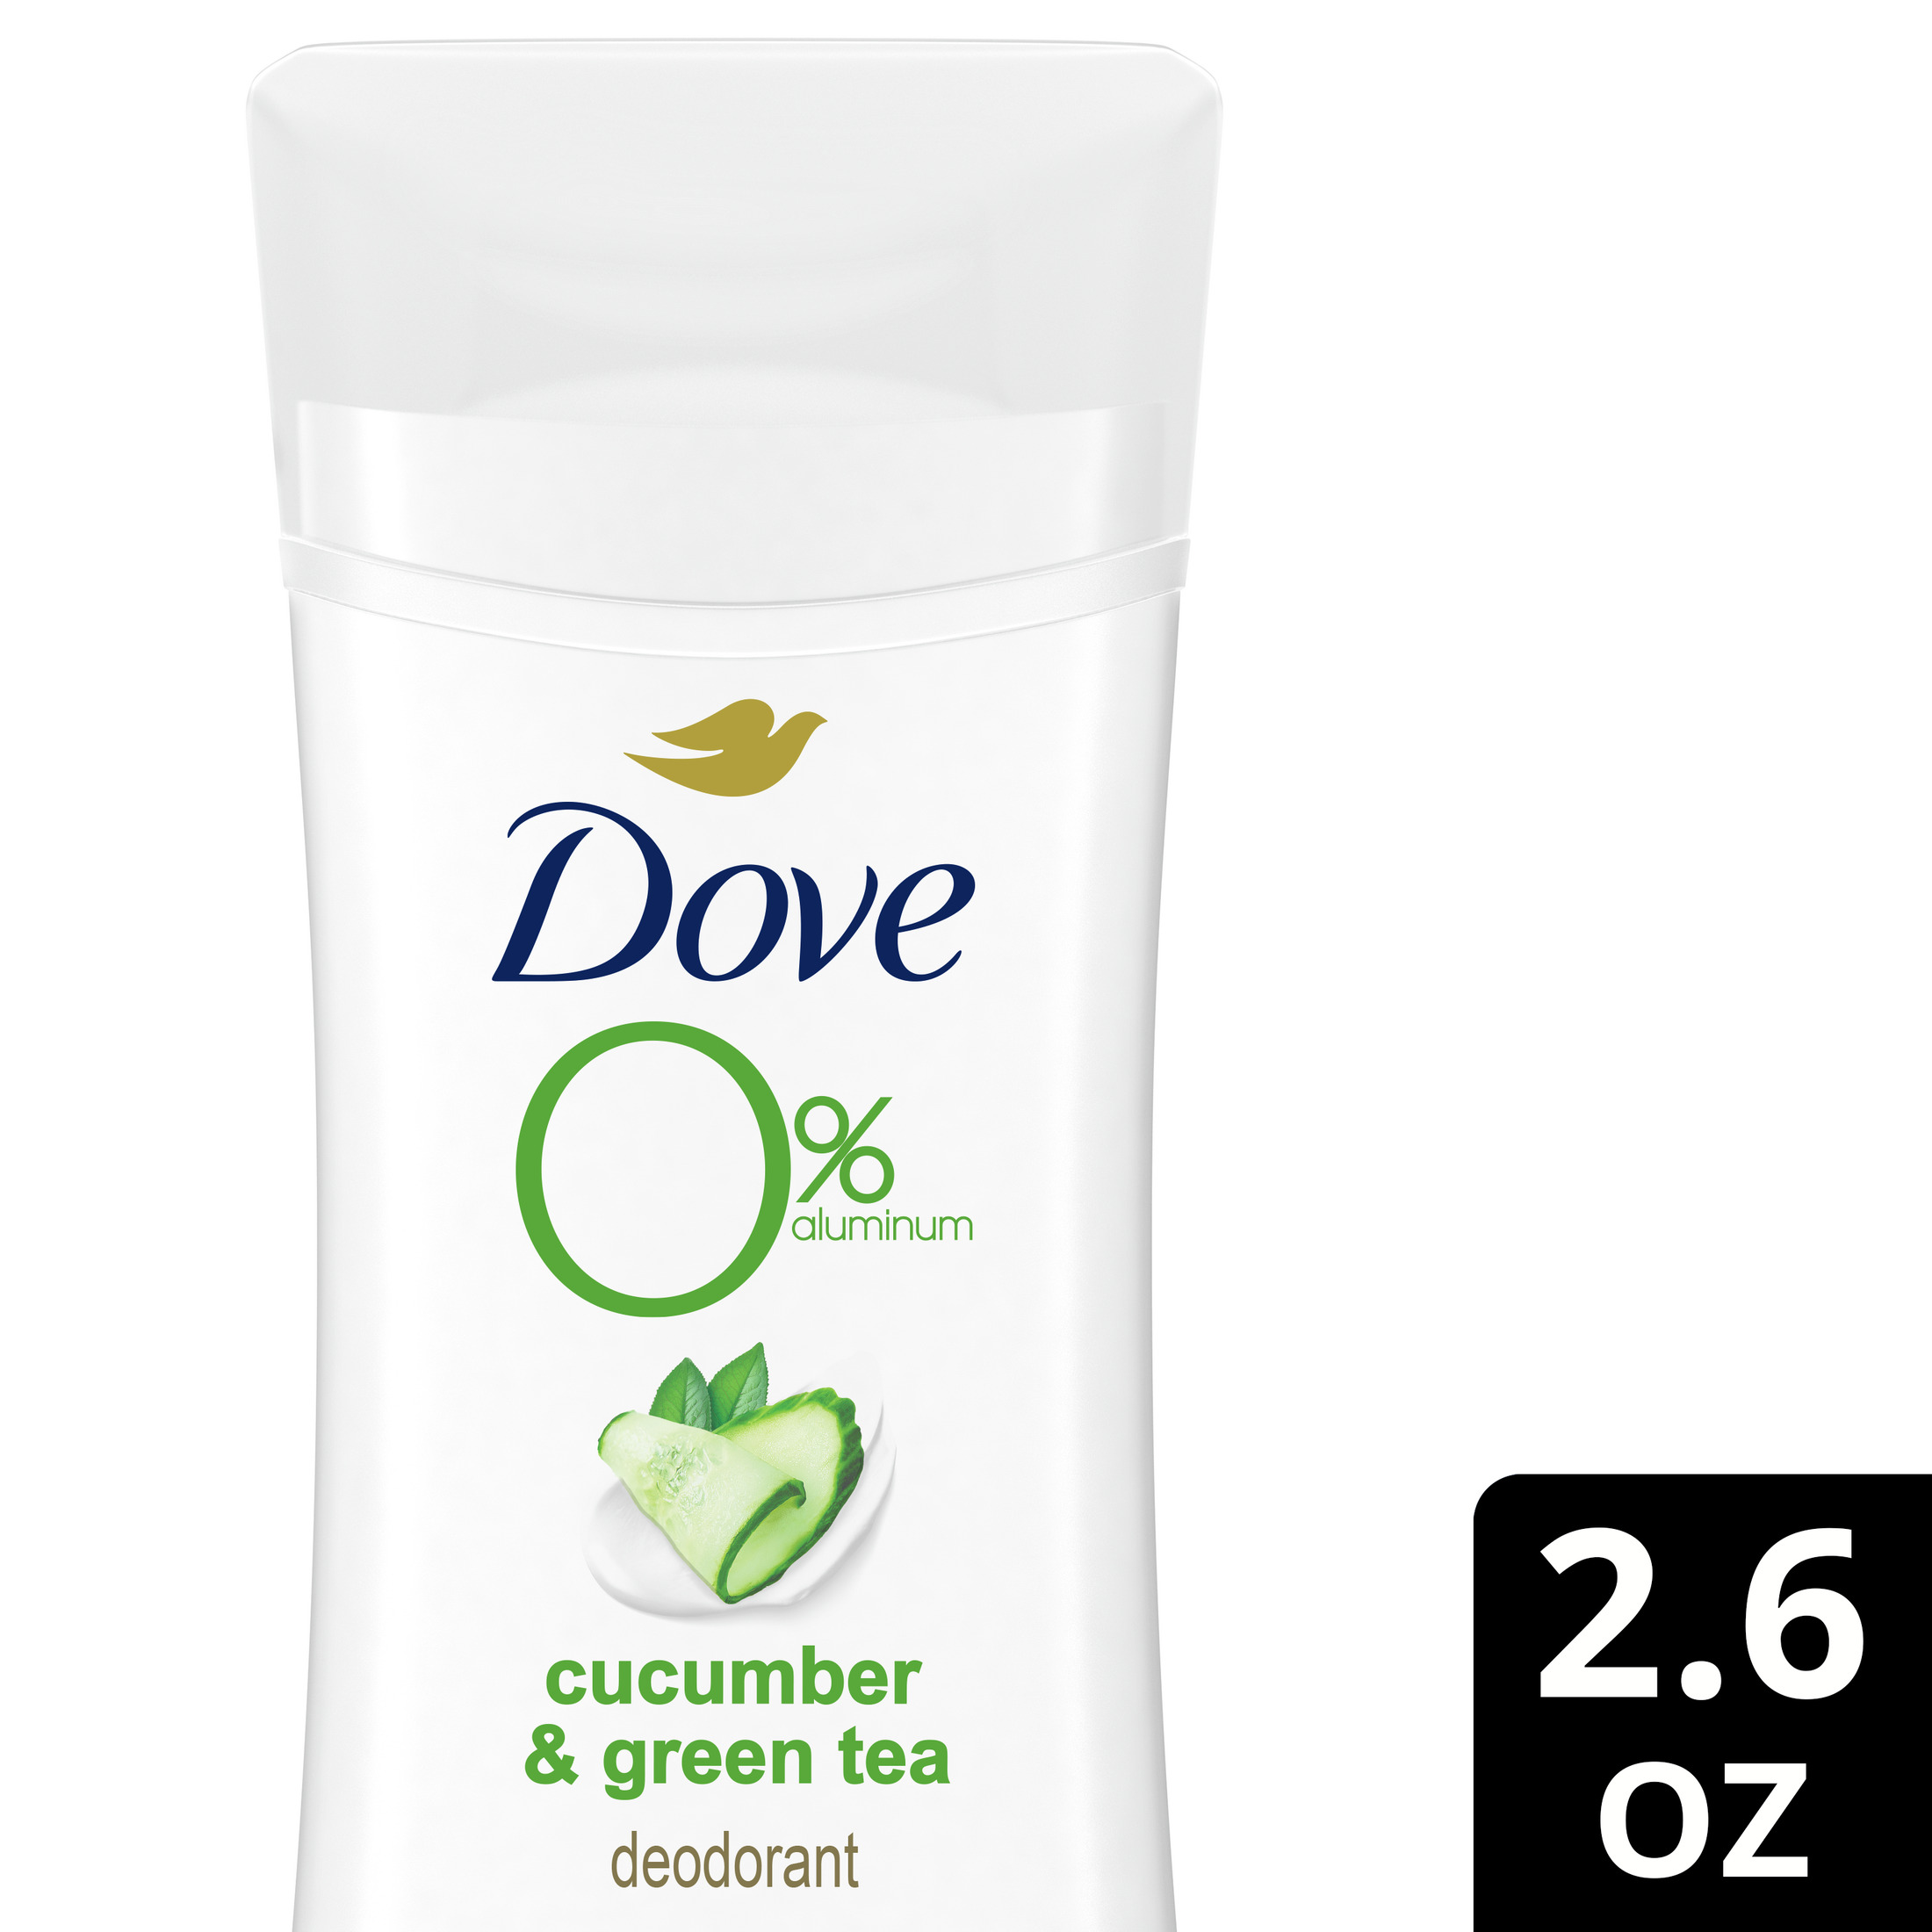 Dove 0% Aluminum Women's Deodorant Stick, Cucumber and Green Tea, 2.6 oz - image 2 of 10